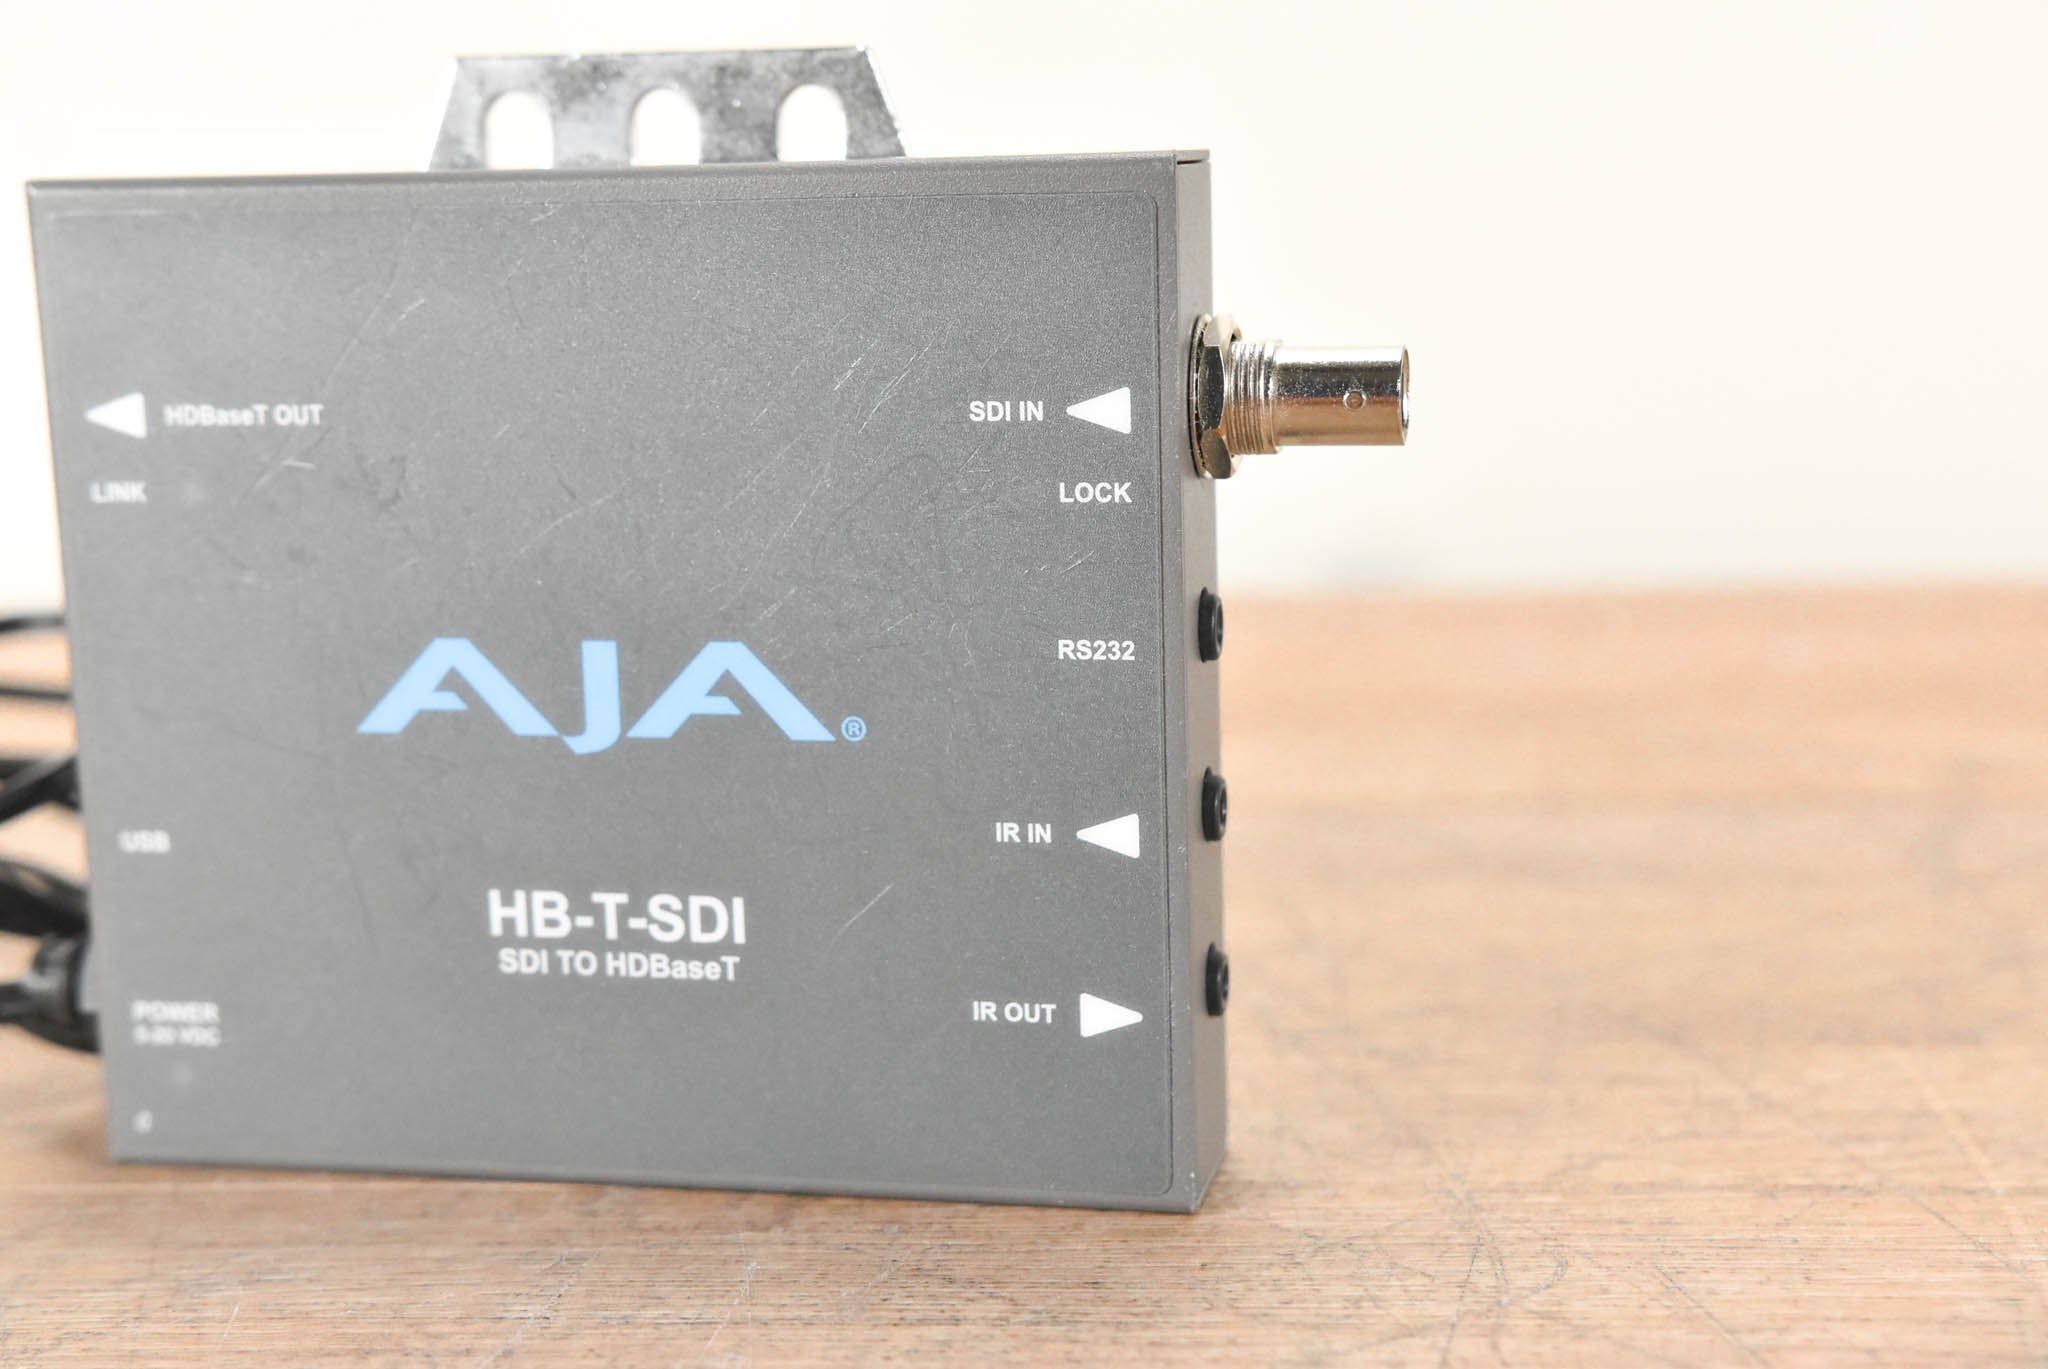 AJA HB-T-SDI SDI to HDBaseT Transmitter